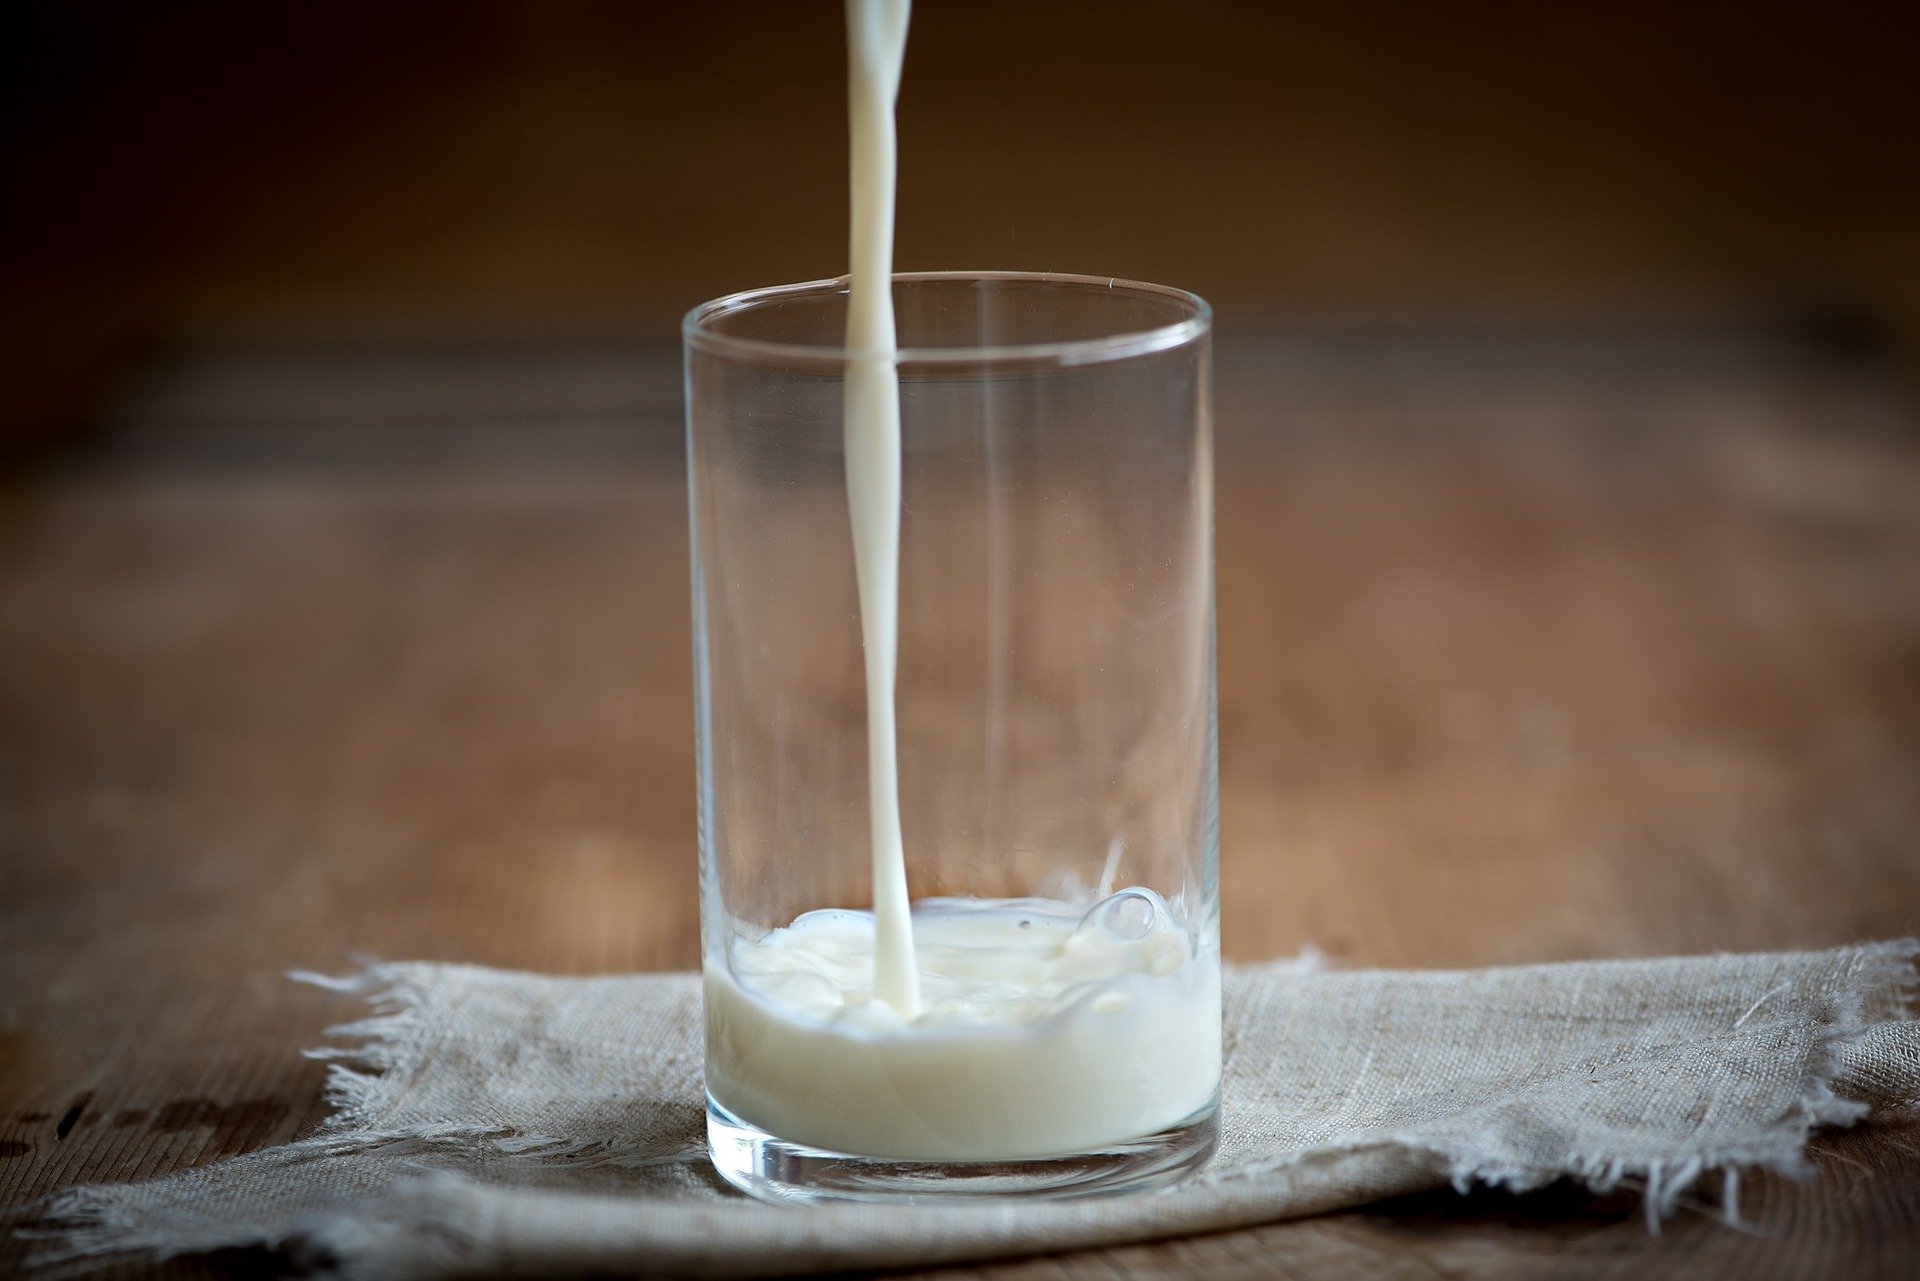 Apakah susu tinggi lemak dapat melindungi tubuh dari sindrom metabolik?